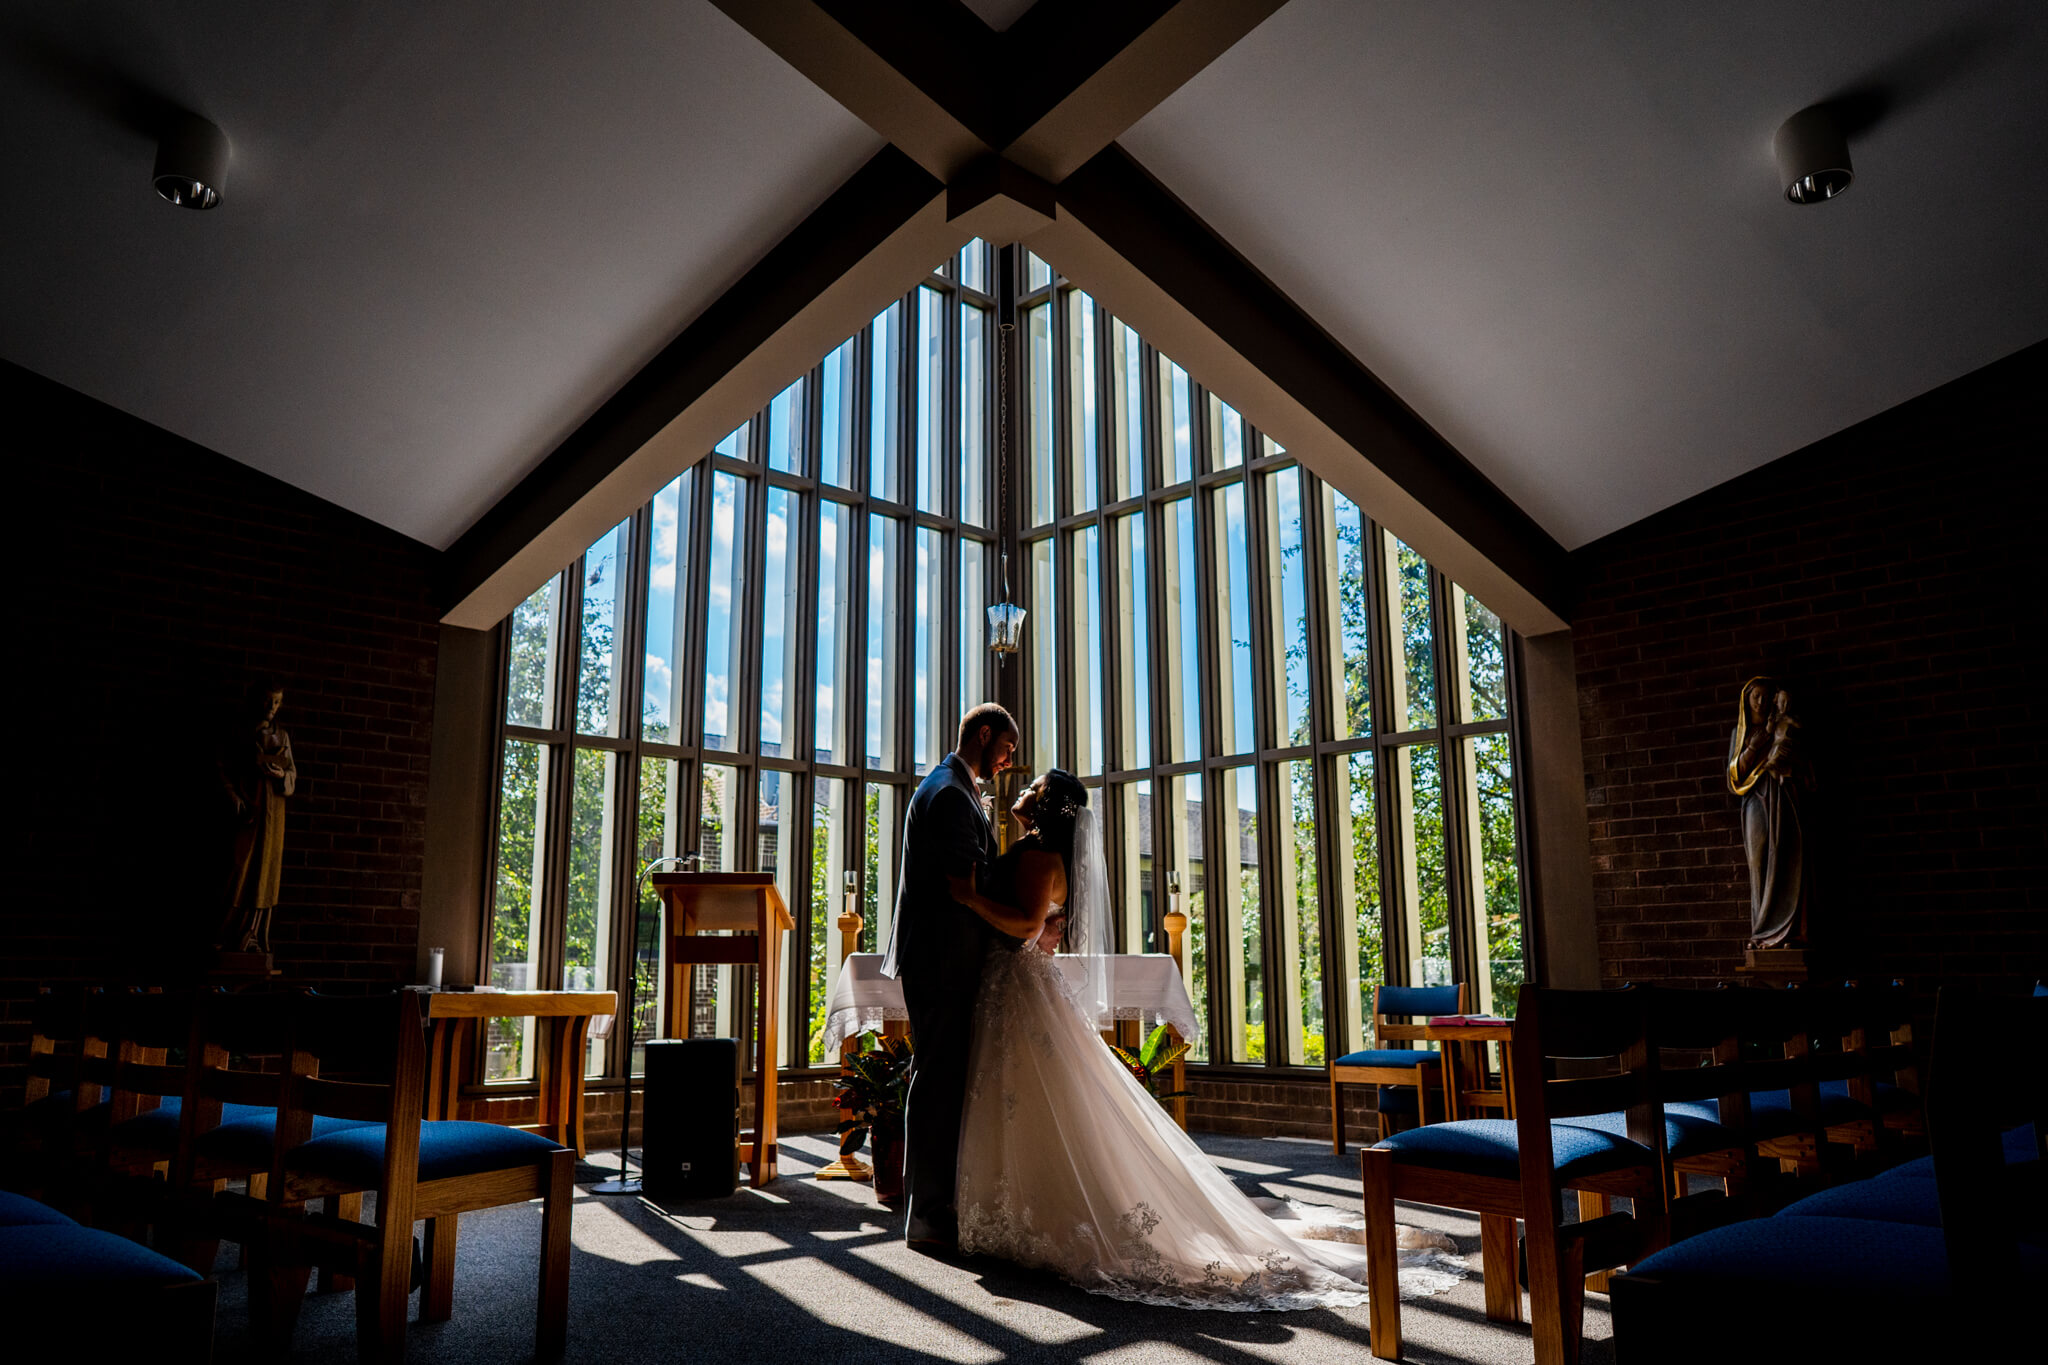 Lhynette Sean St Marks Church Top of the Town Arlington VA Wedding Photography-32.jpg